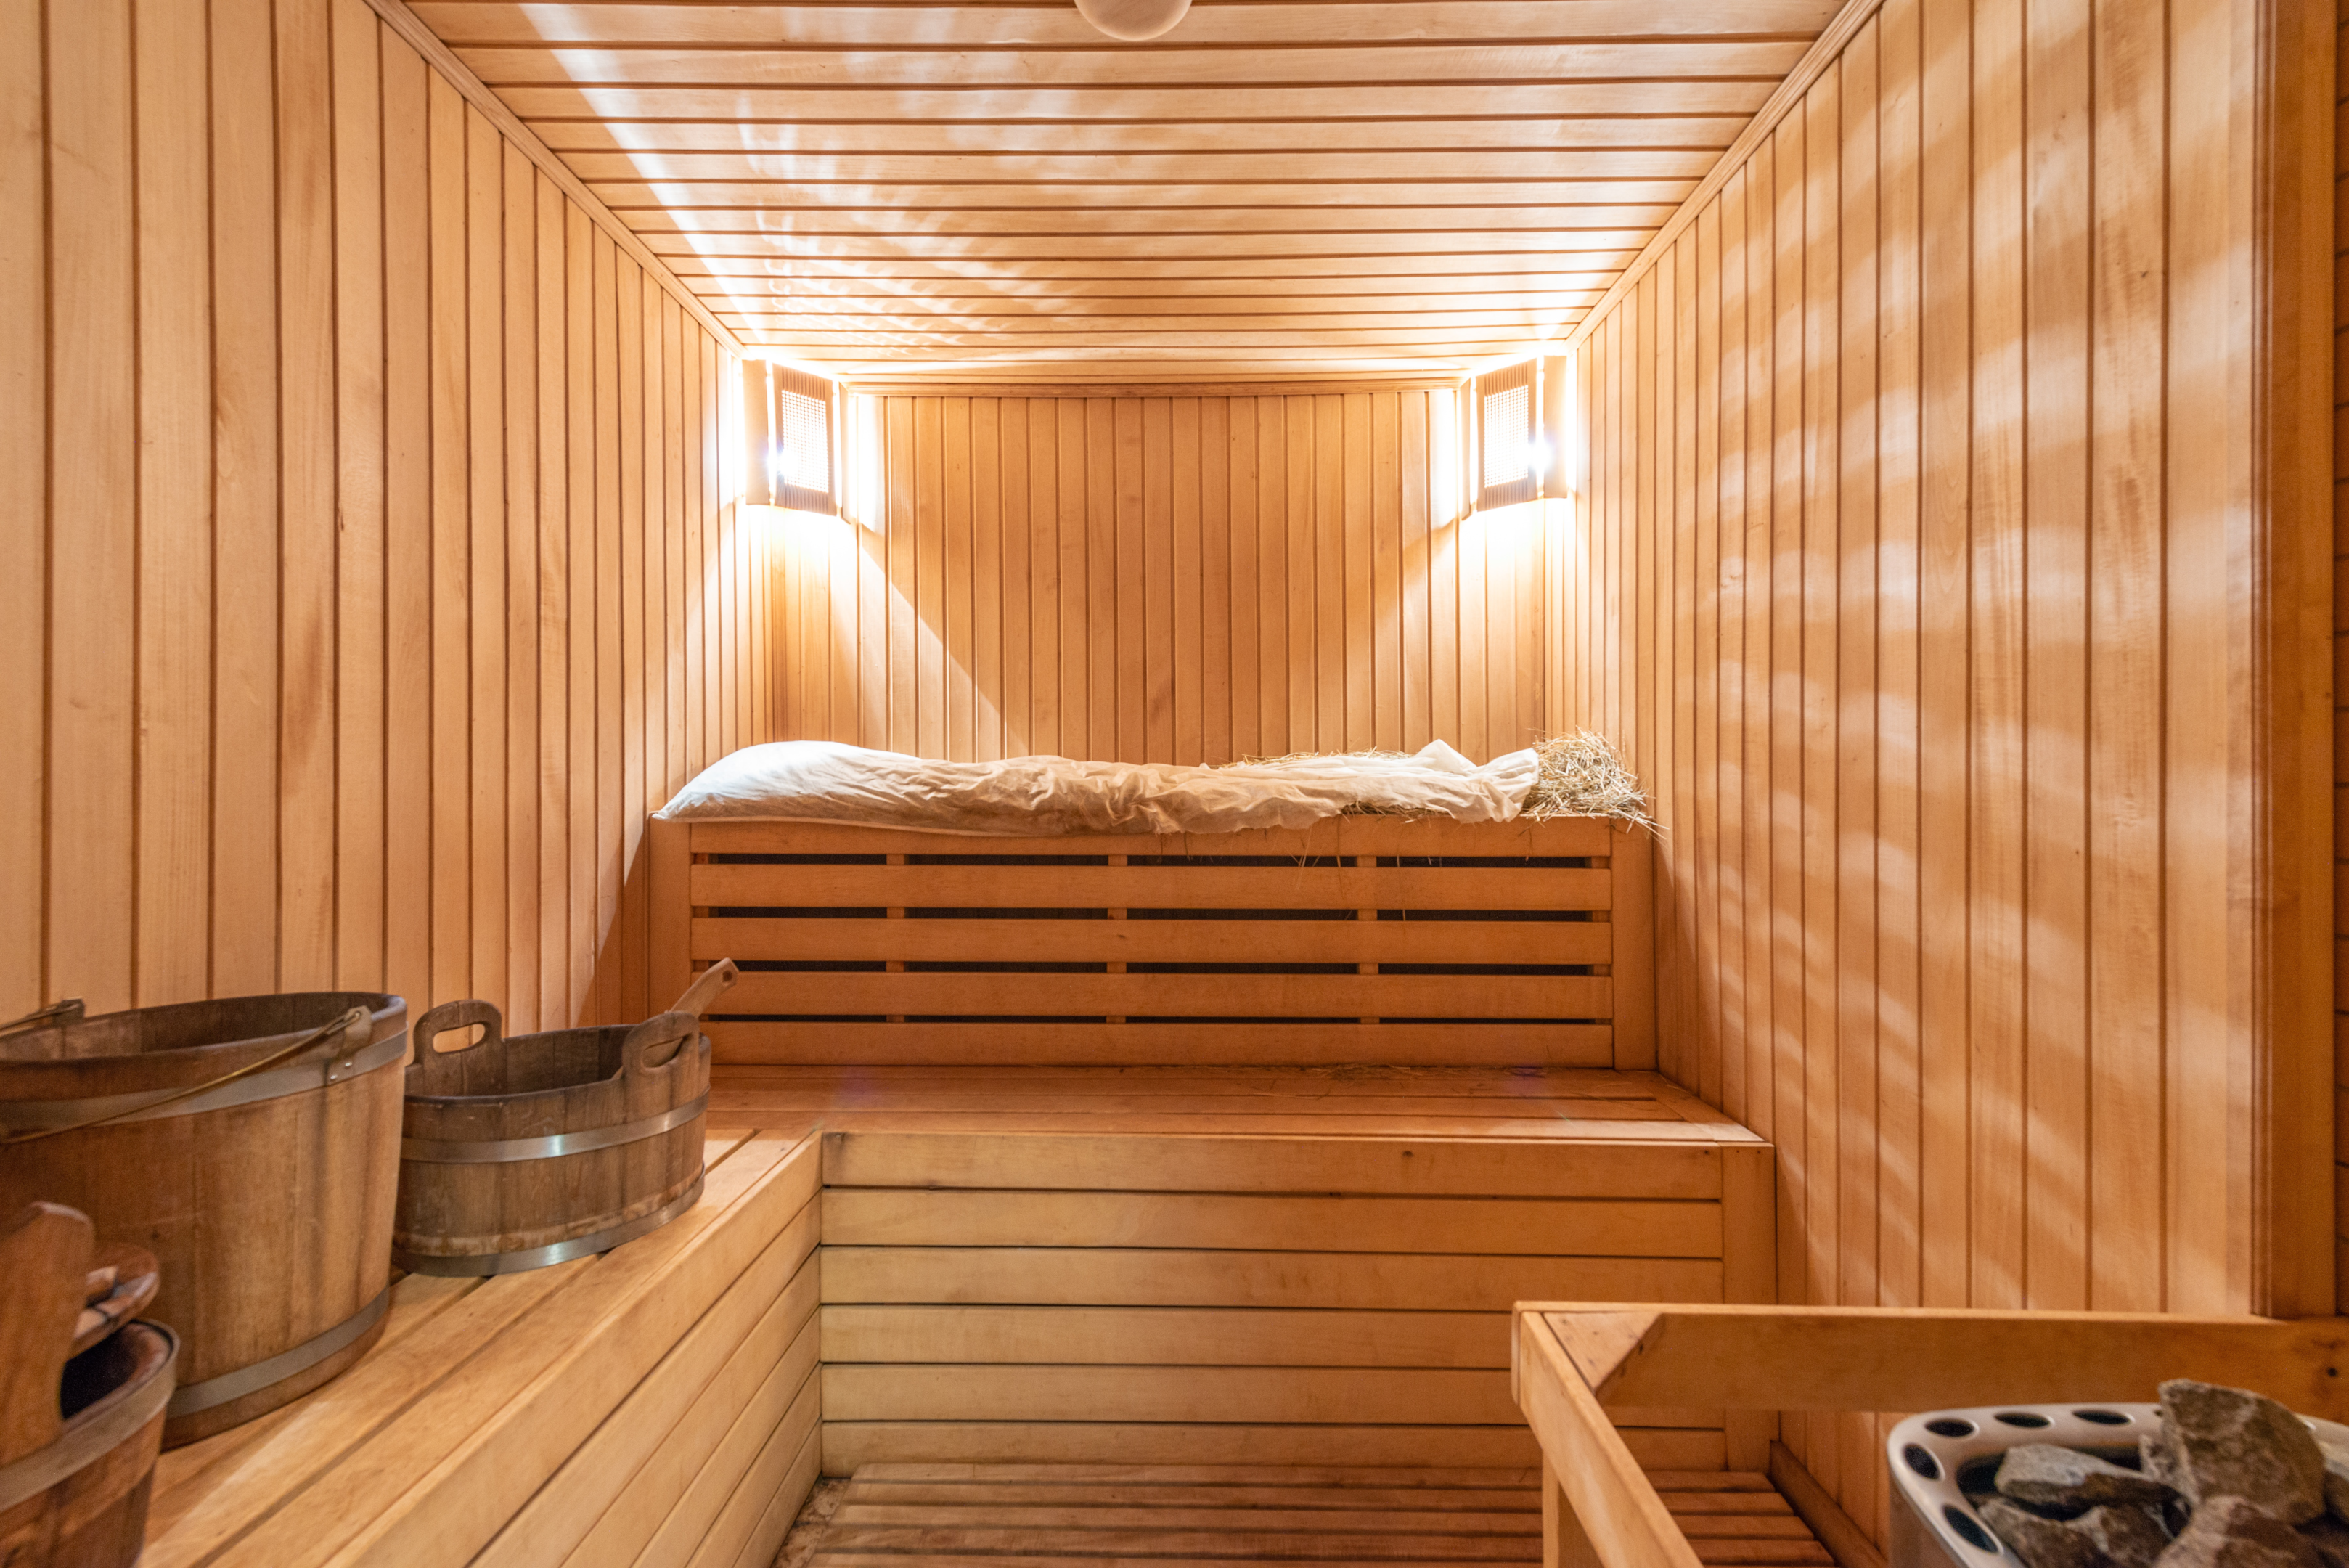 maximum temperature of a traditional dry sauna